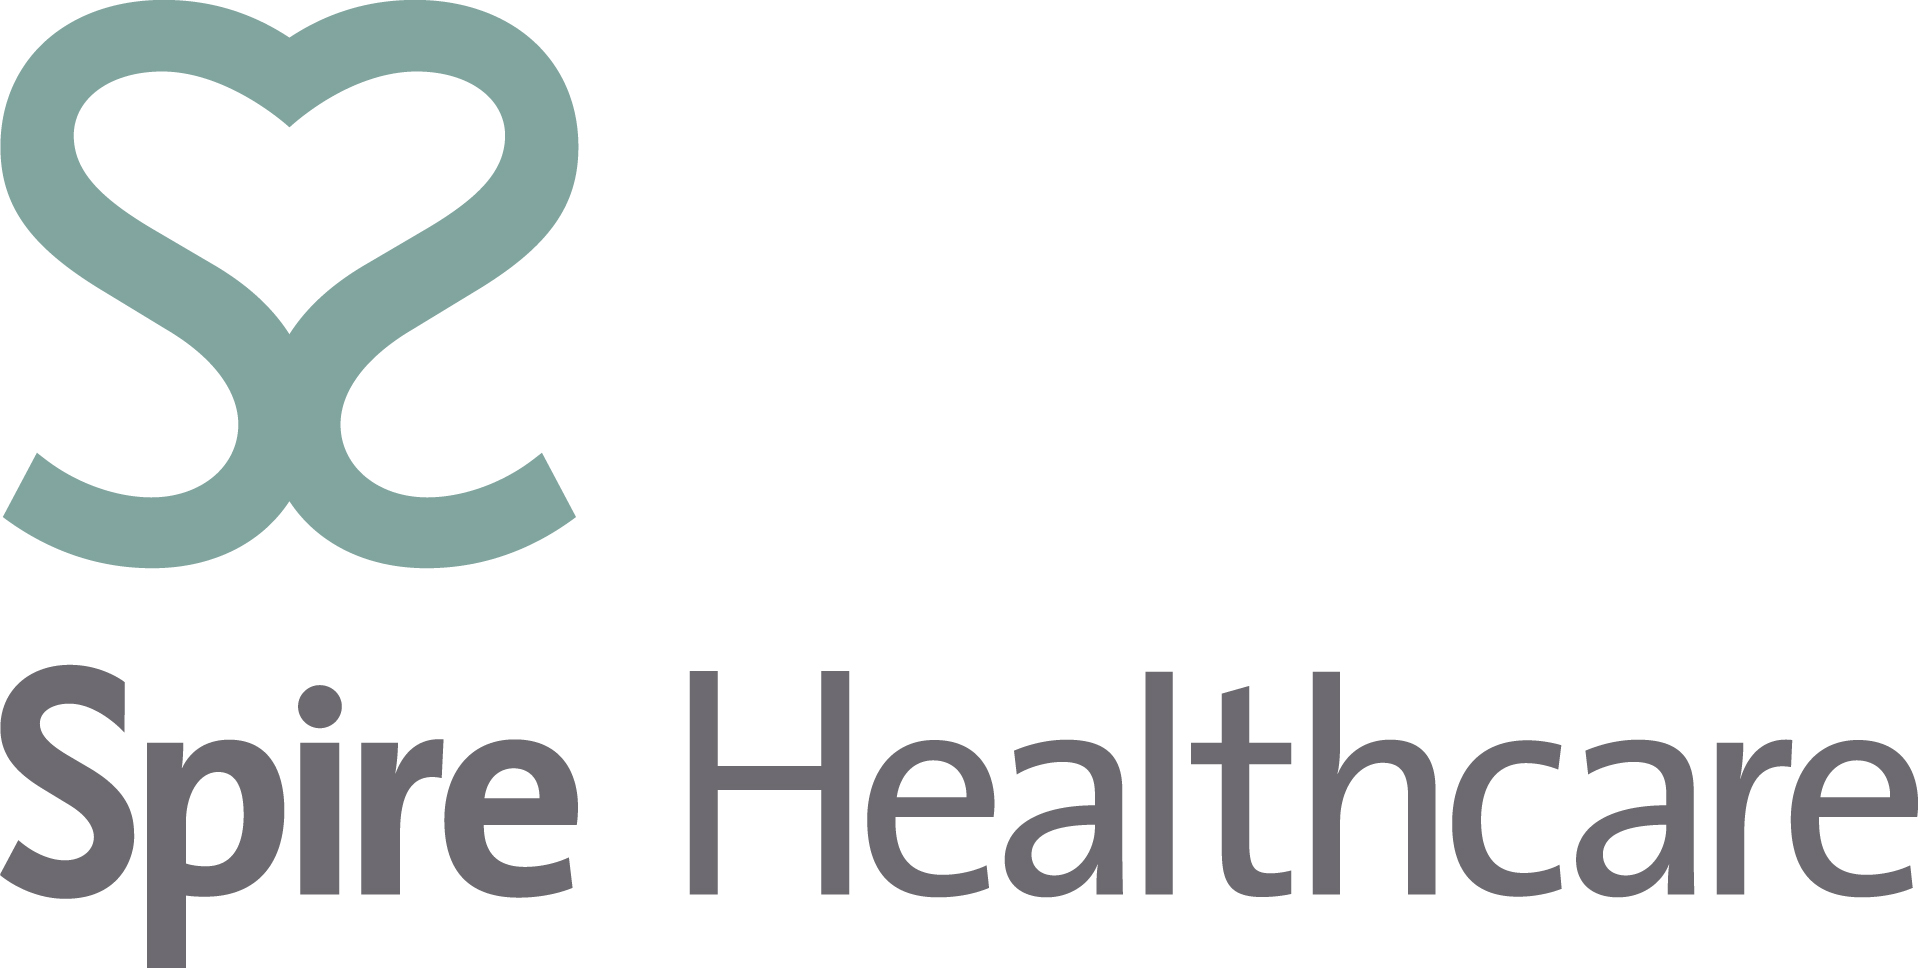 Spire Healthcare logo colour - JPEG.jpg